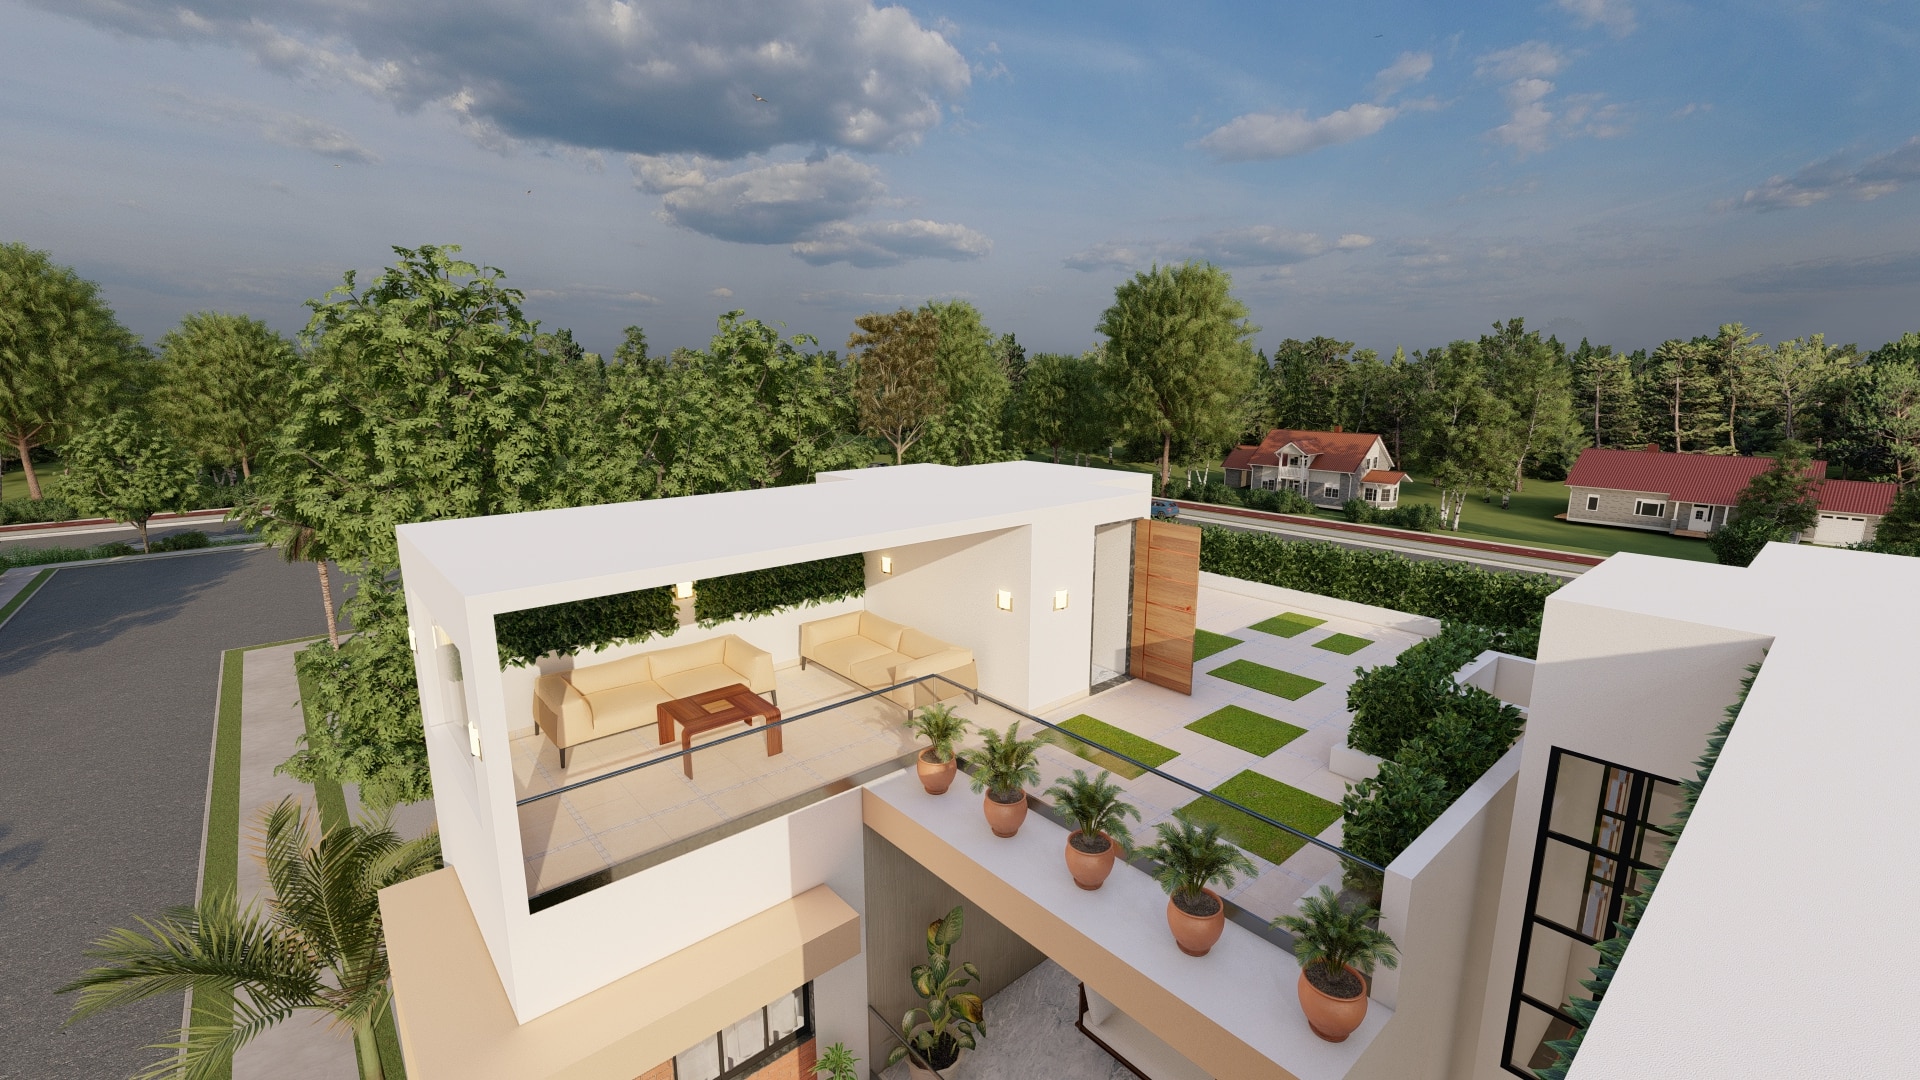 lavish terrace luxury bungalow home design east facing 30x50 sq ft urban terrace